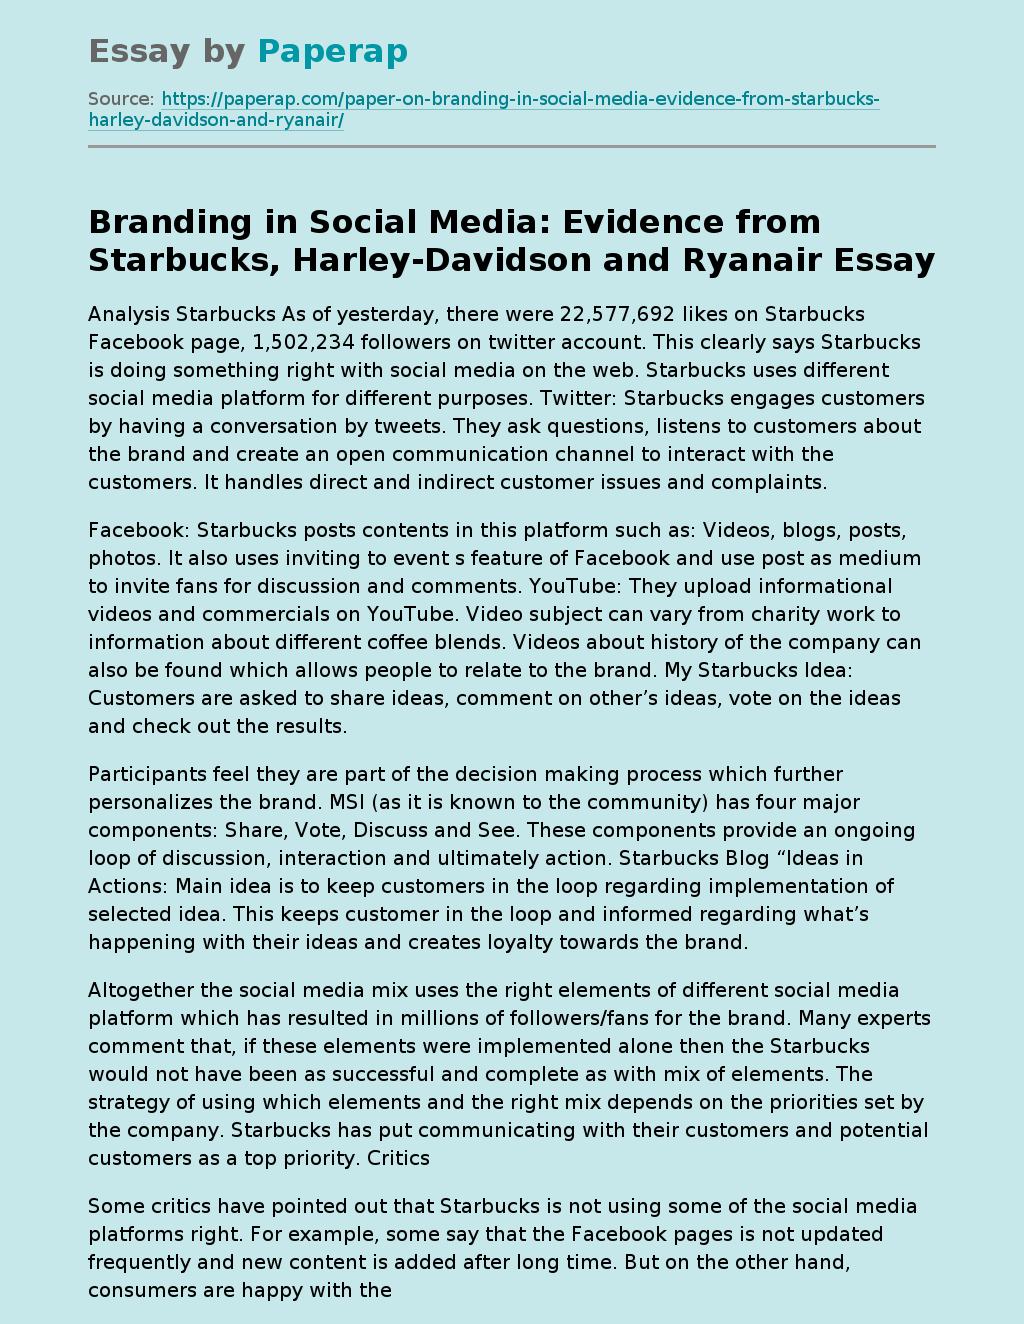 Branding in Social Media: Evidence from Starbucks, Harley-Davidson and Ryanair